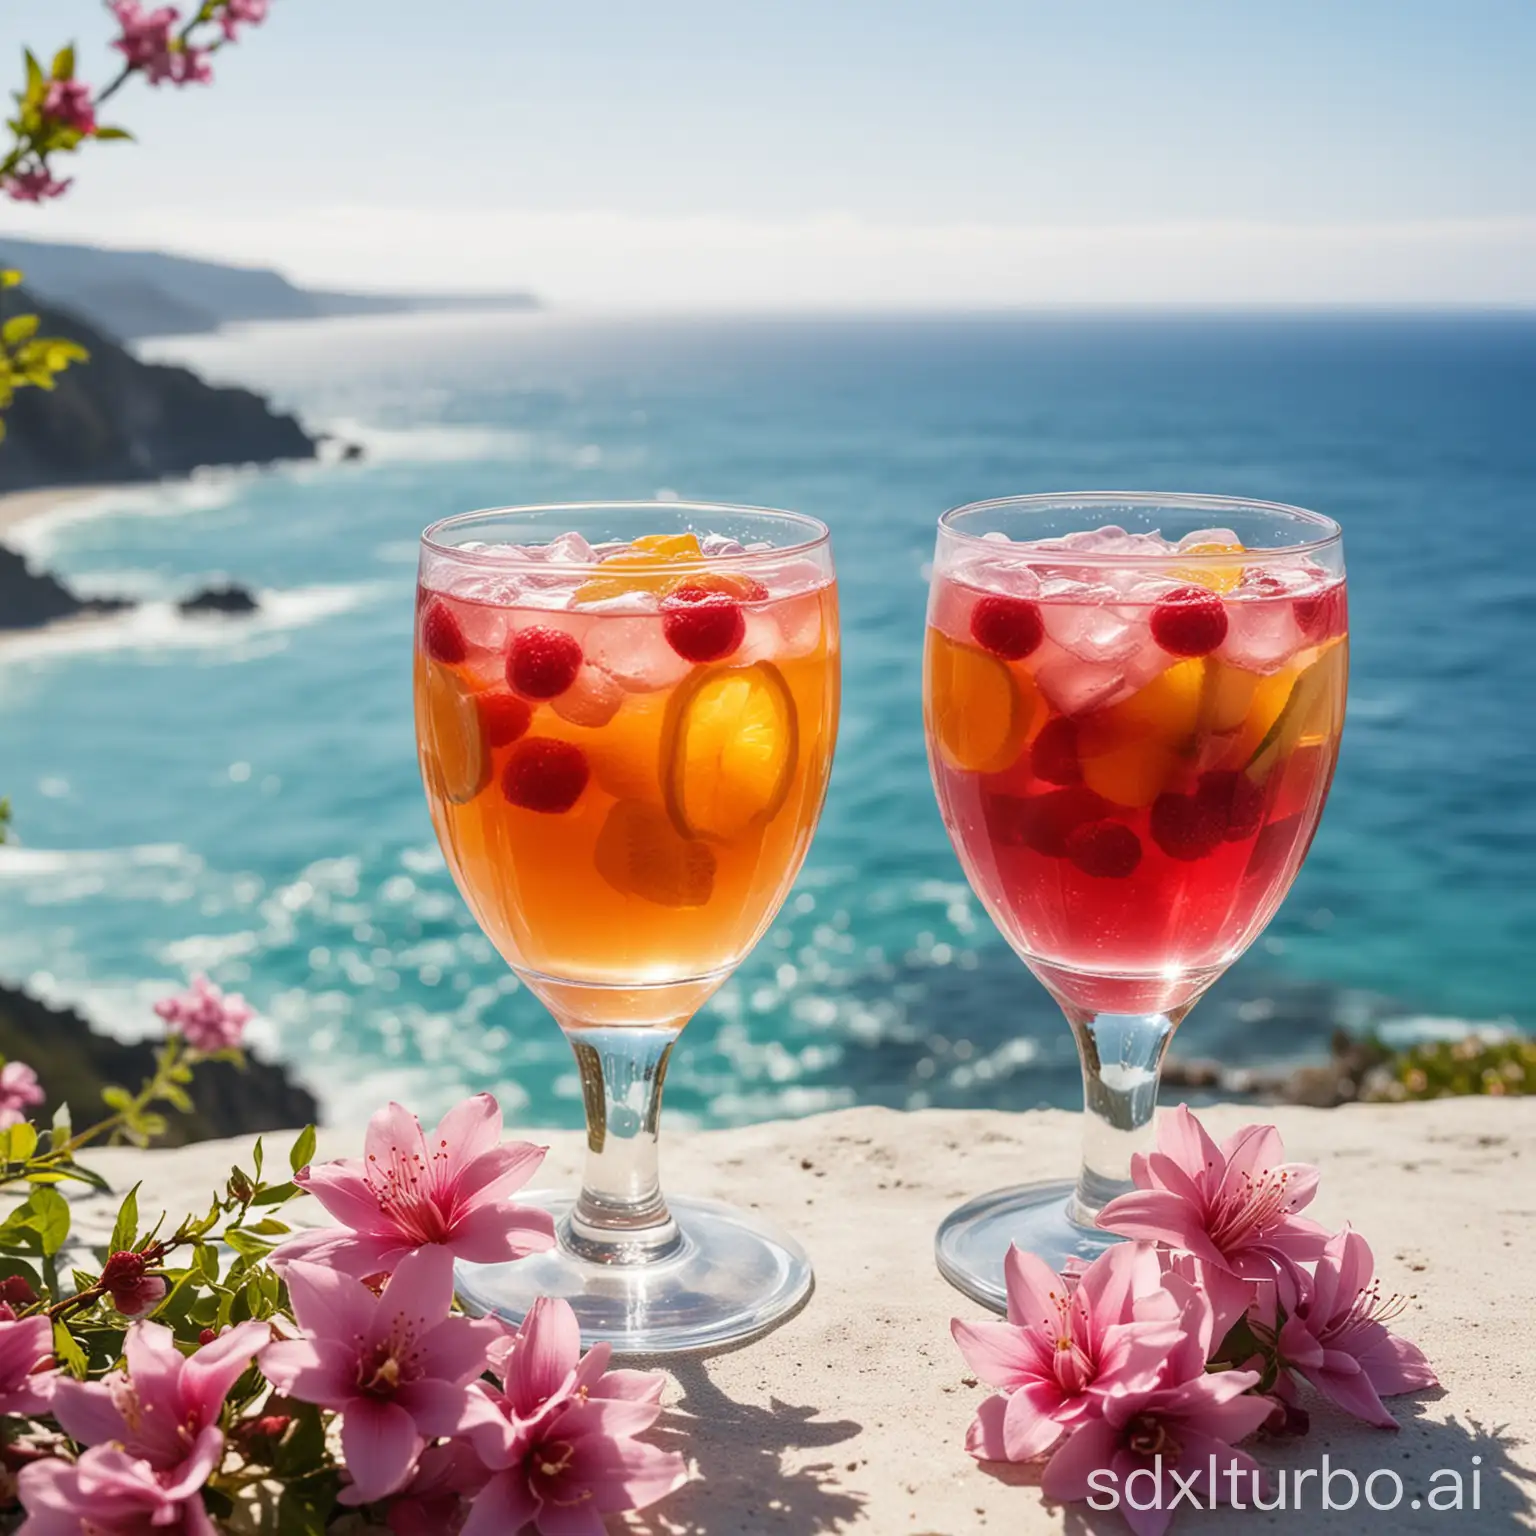 Refreshing-Fruit-Drinks-in-Transparent-Cups-amidst-Ocean-Flowers